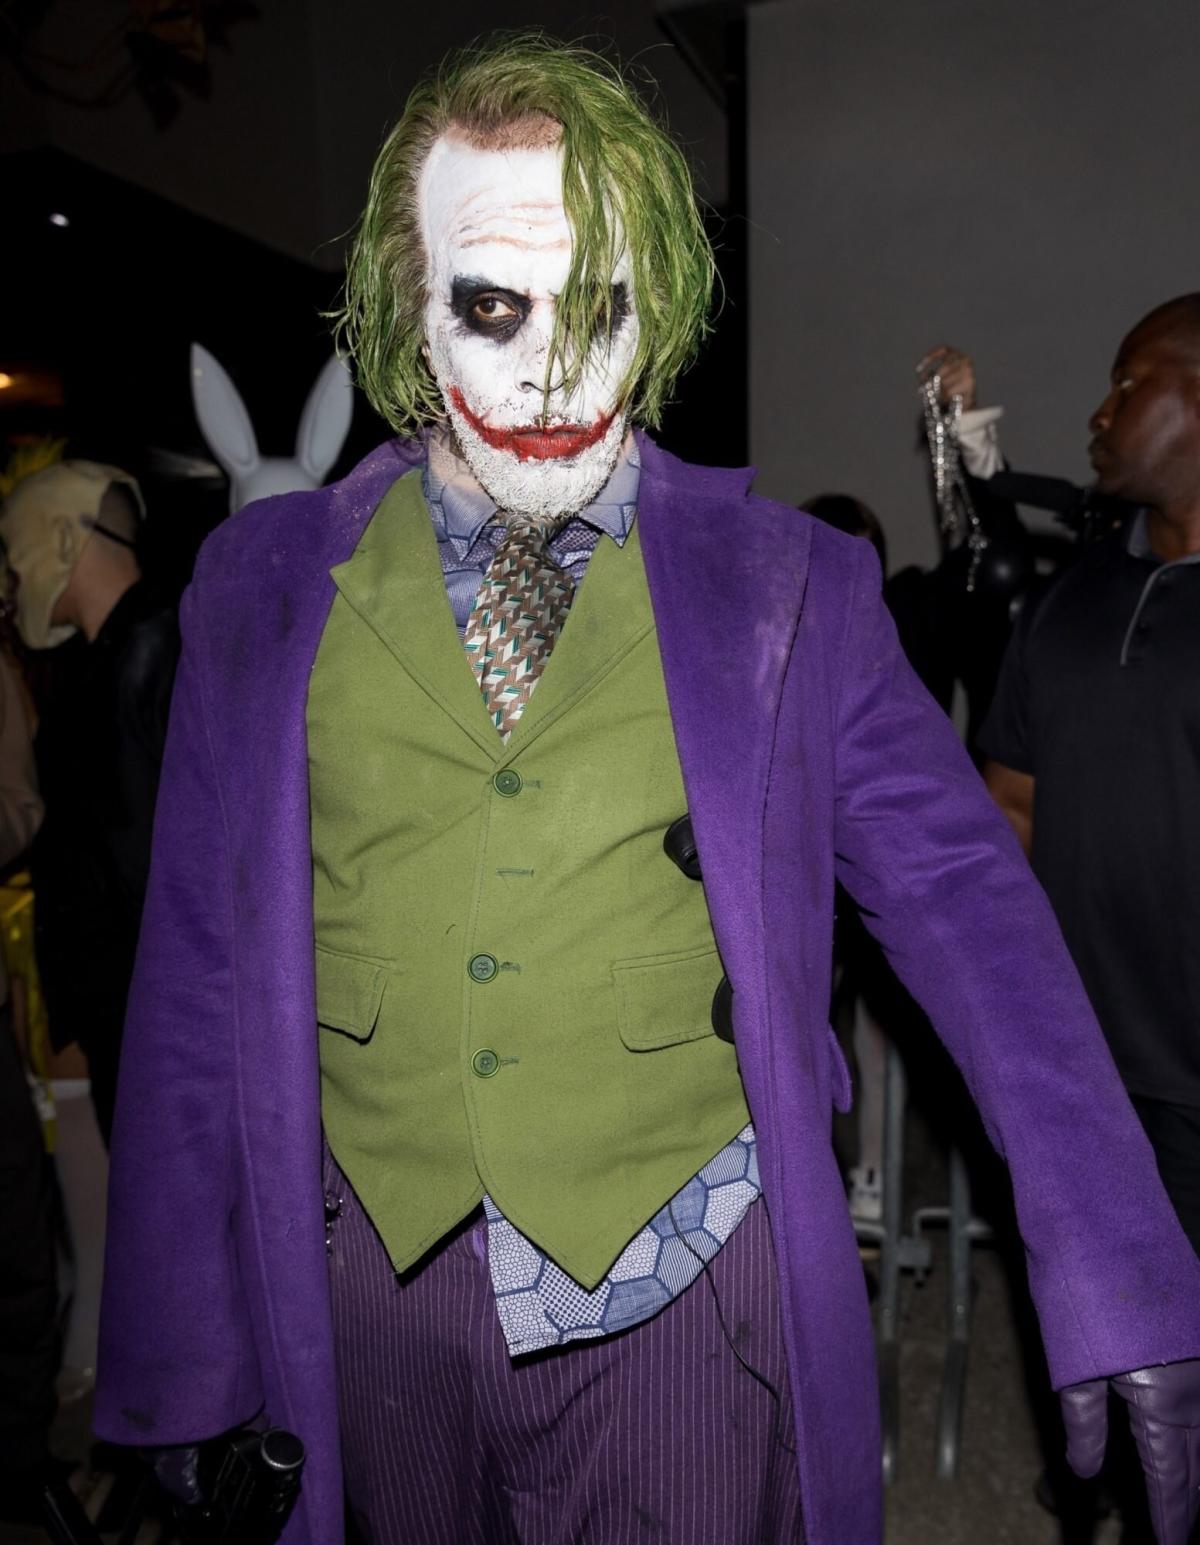 Didi hijacks Halloween with a Heath Ledger Joker costume - flamethrower ...